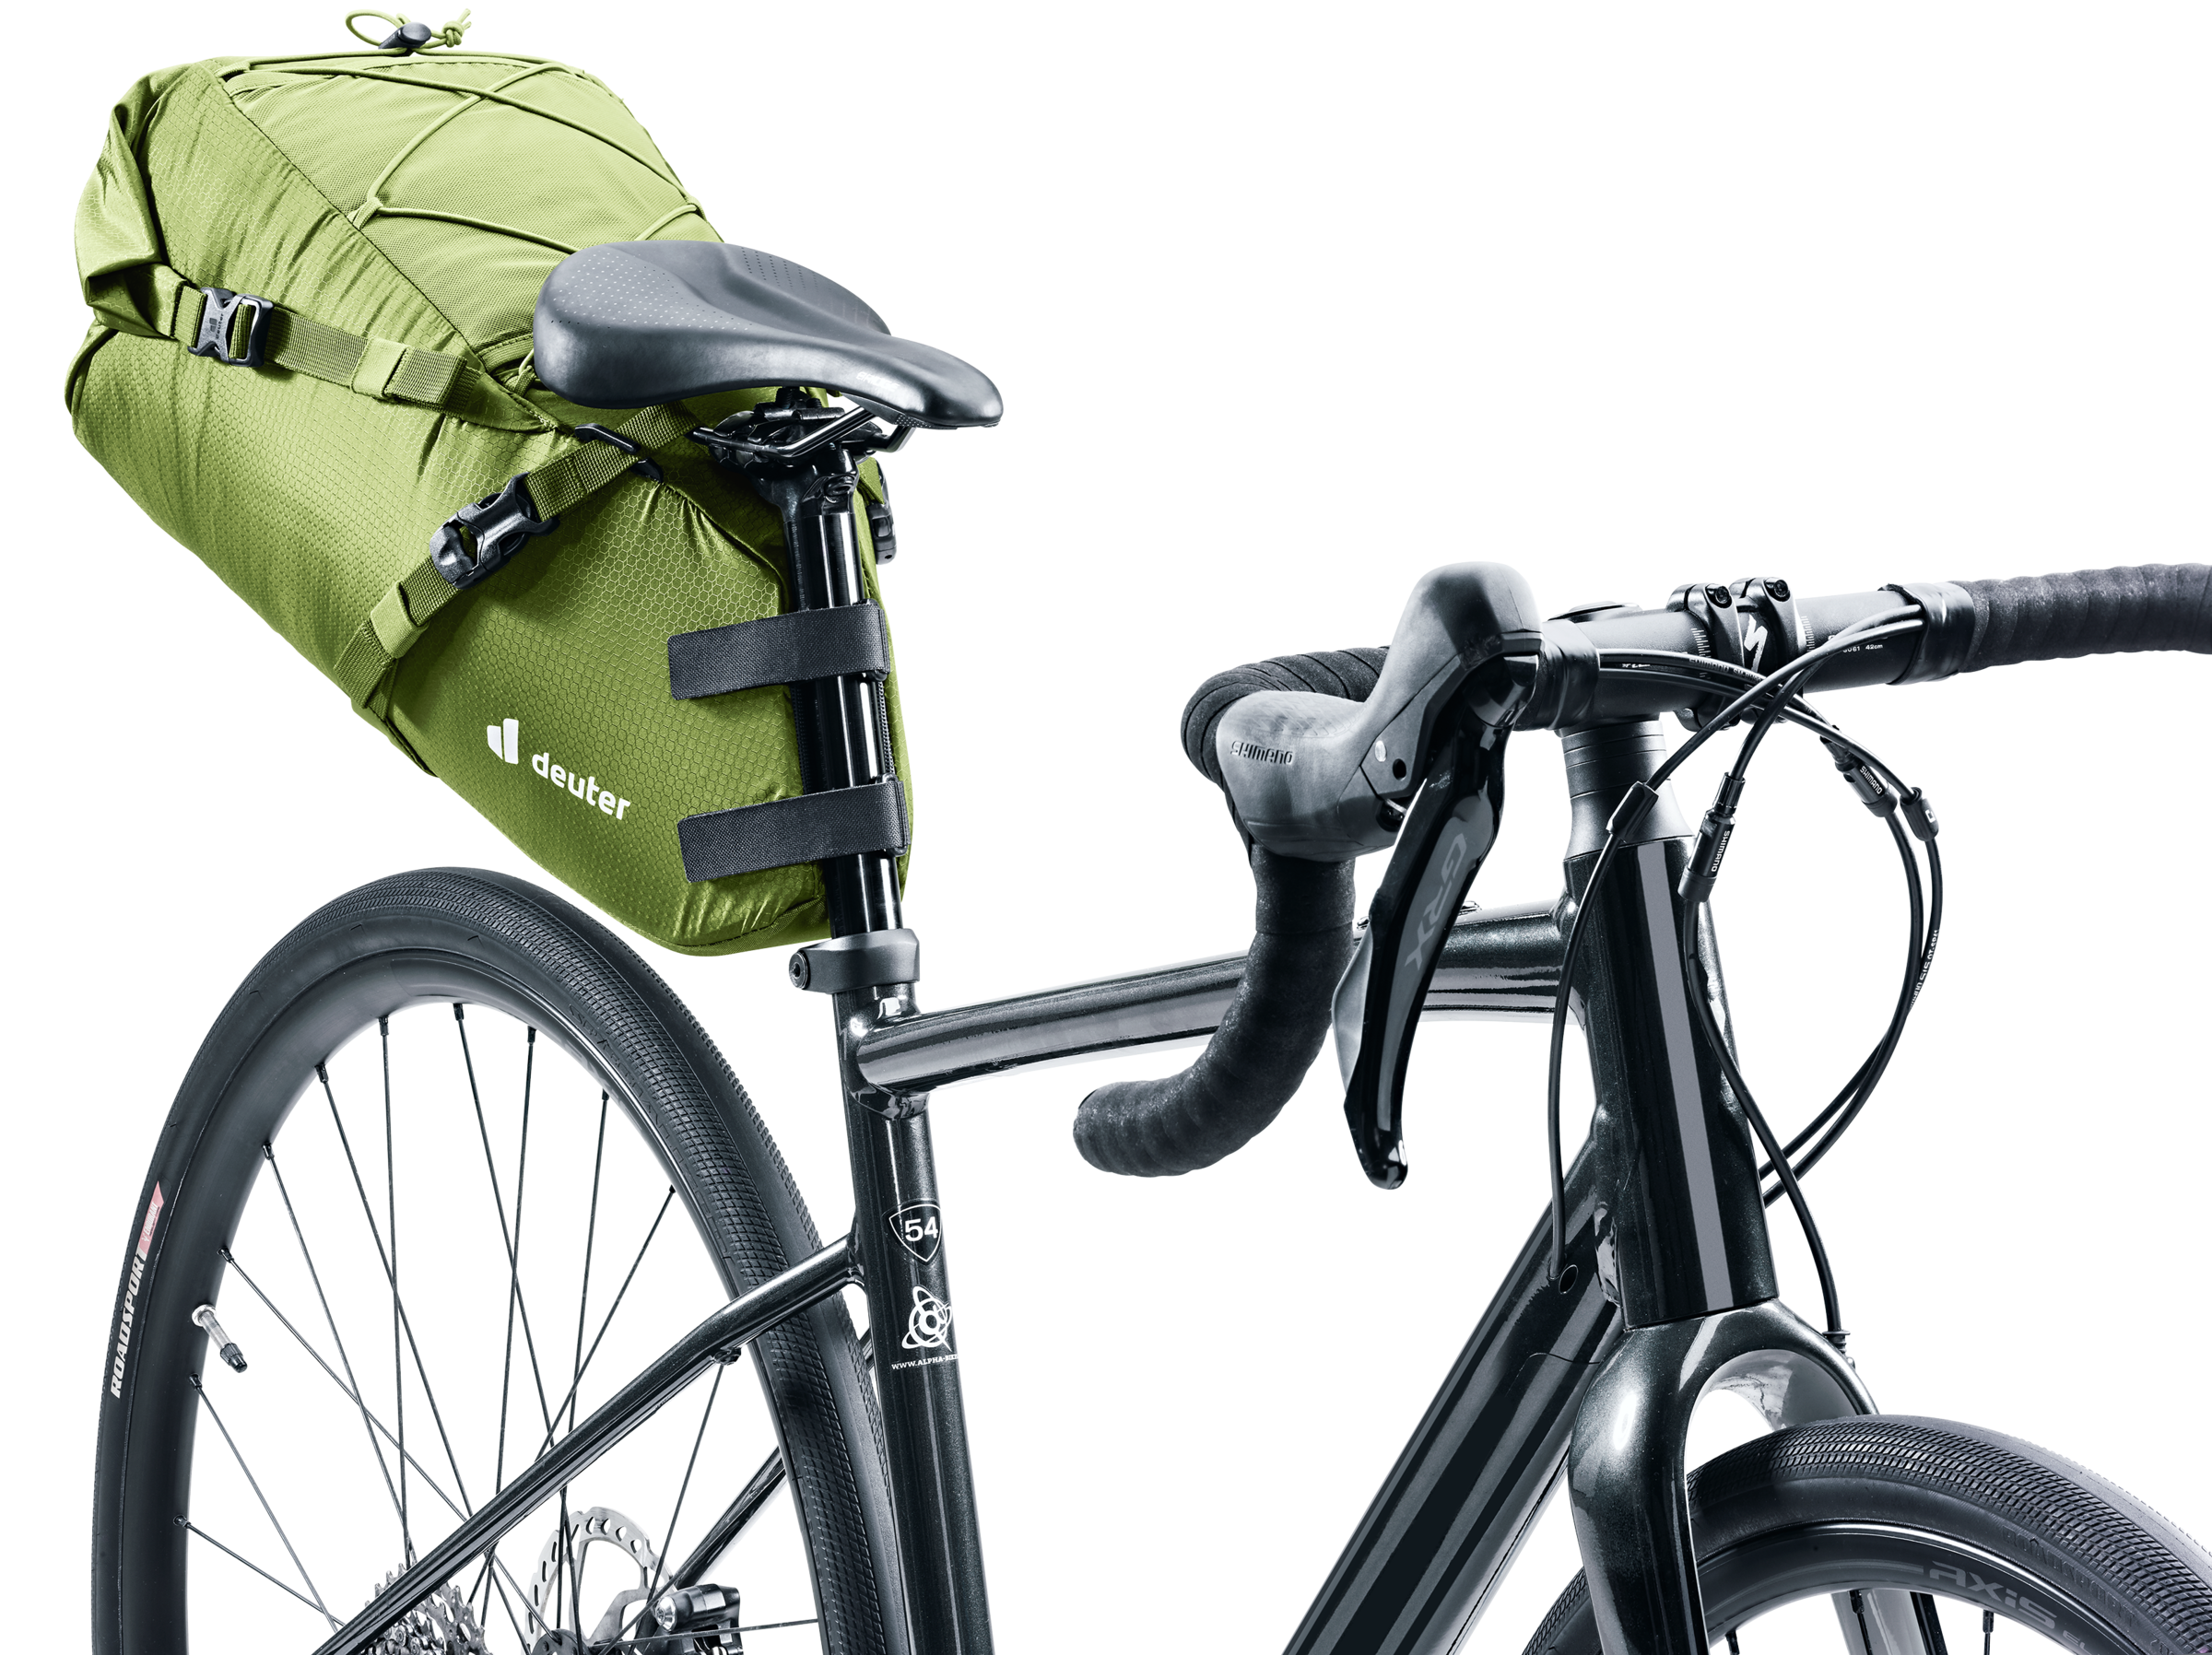 Deuter MONDEGO SB 16 Fahrradtasche green - Premium Bikeshop